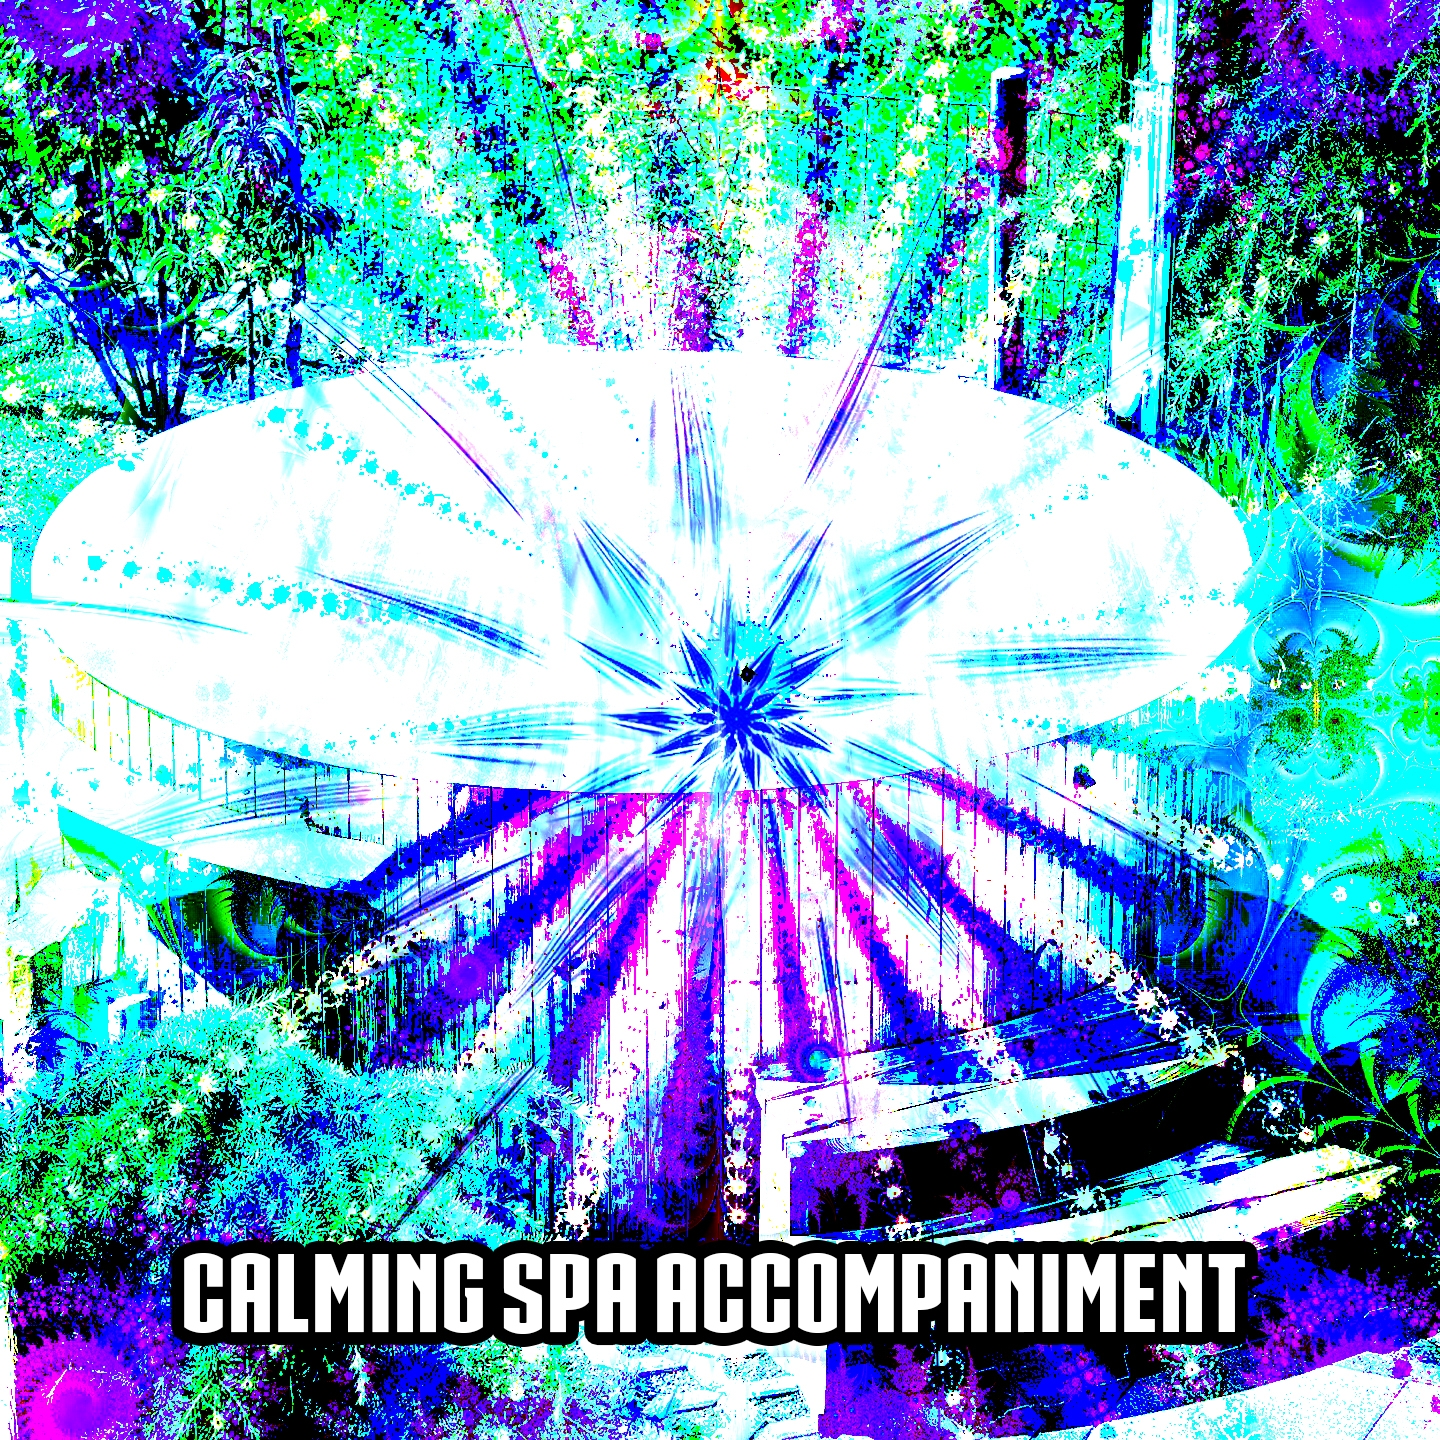 Calming Spa Accompaniment